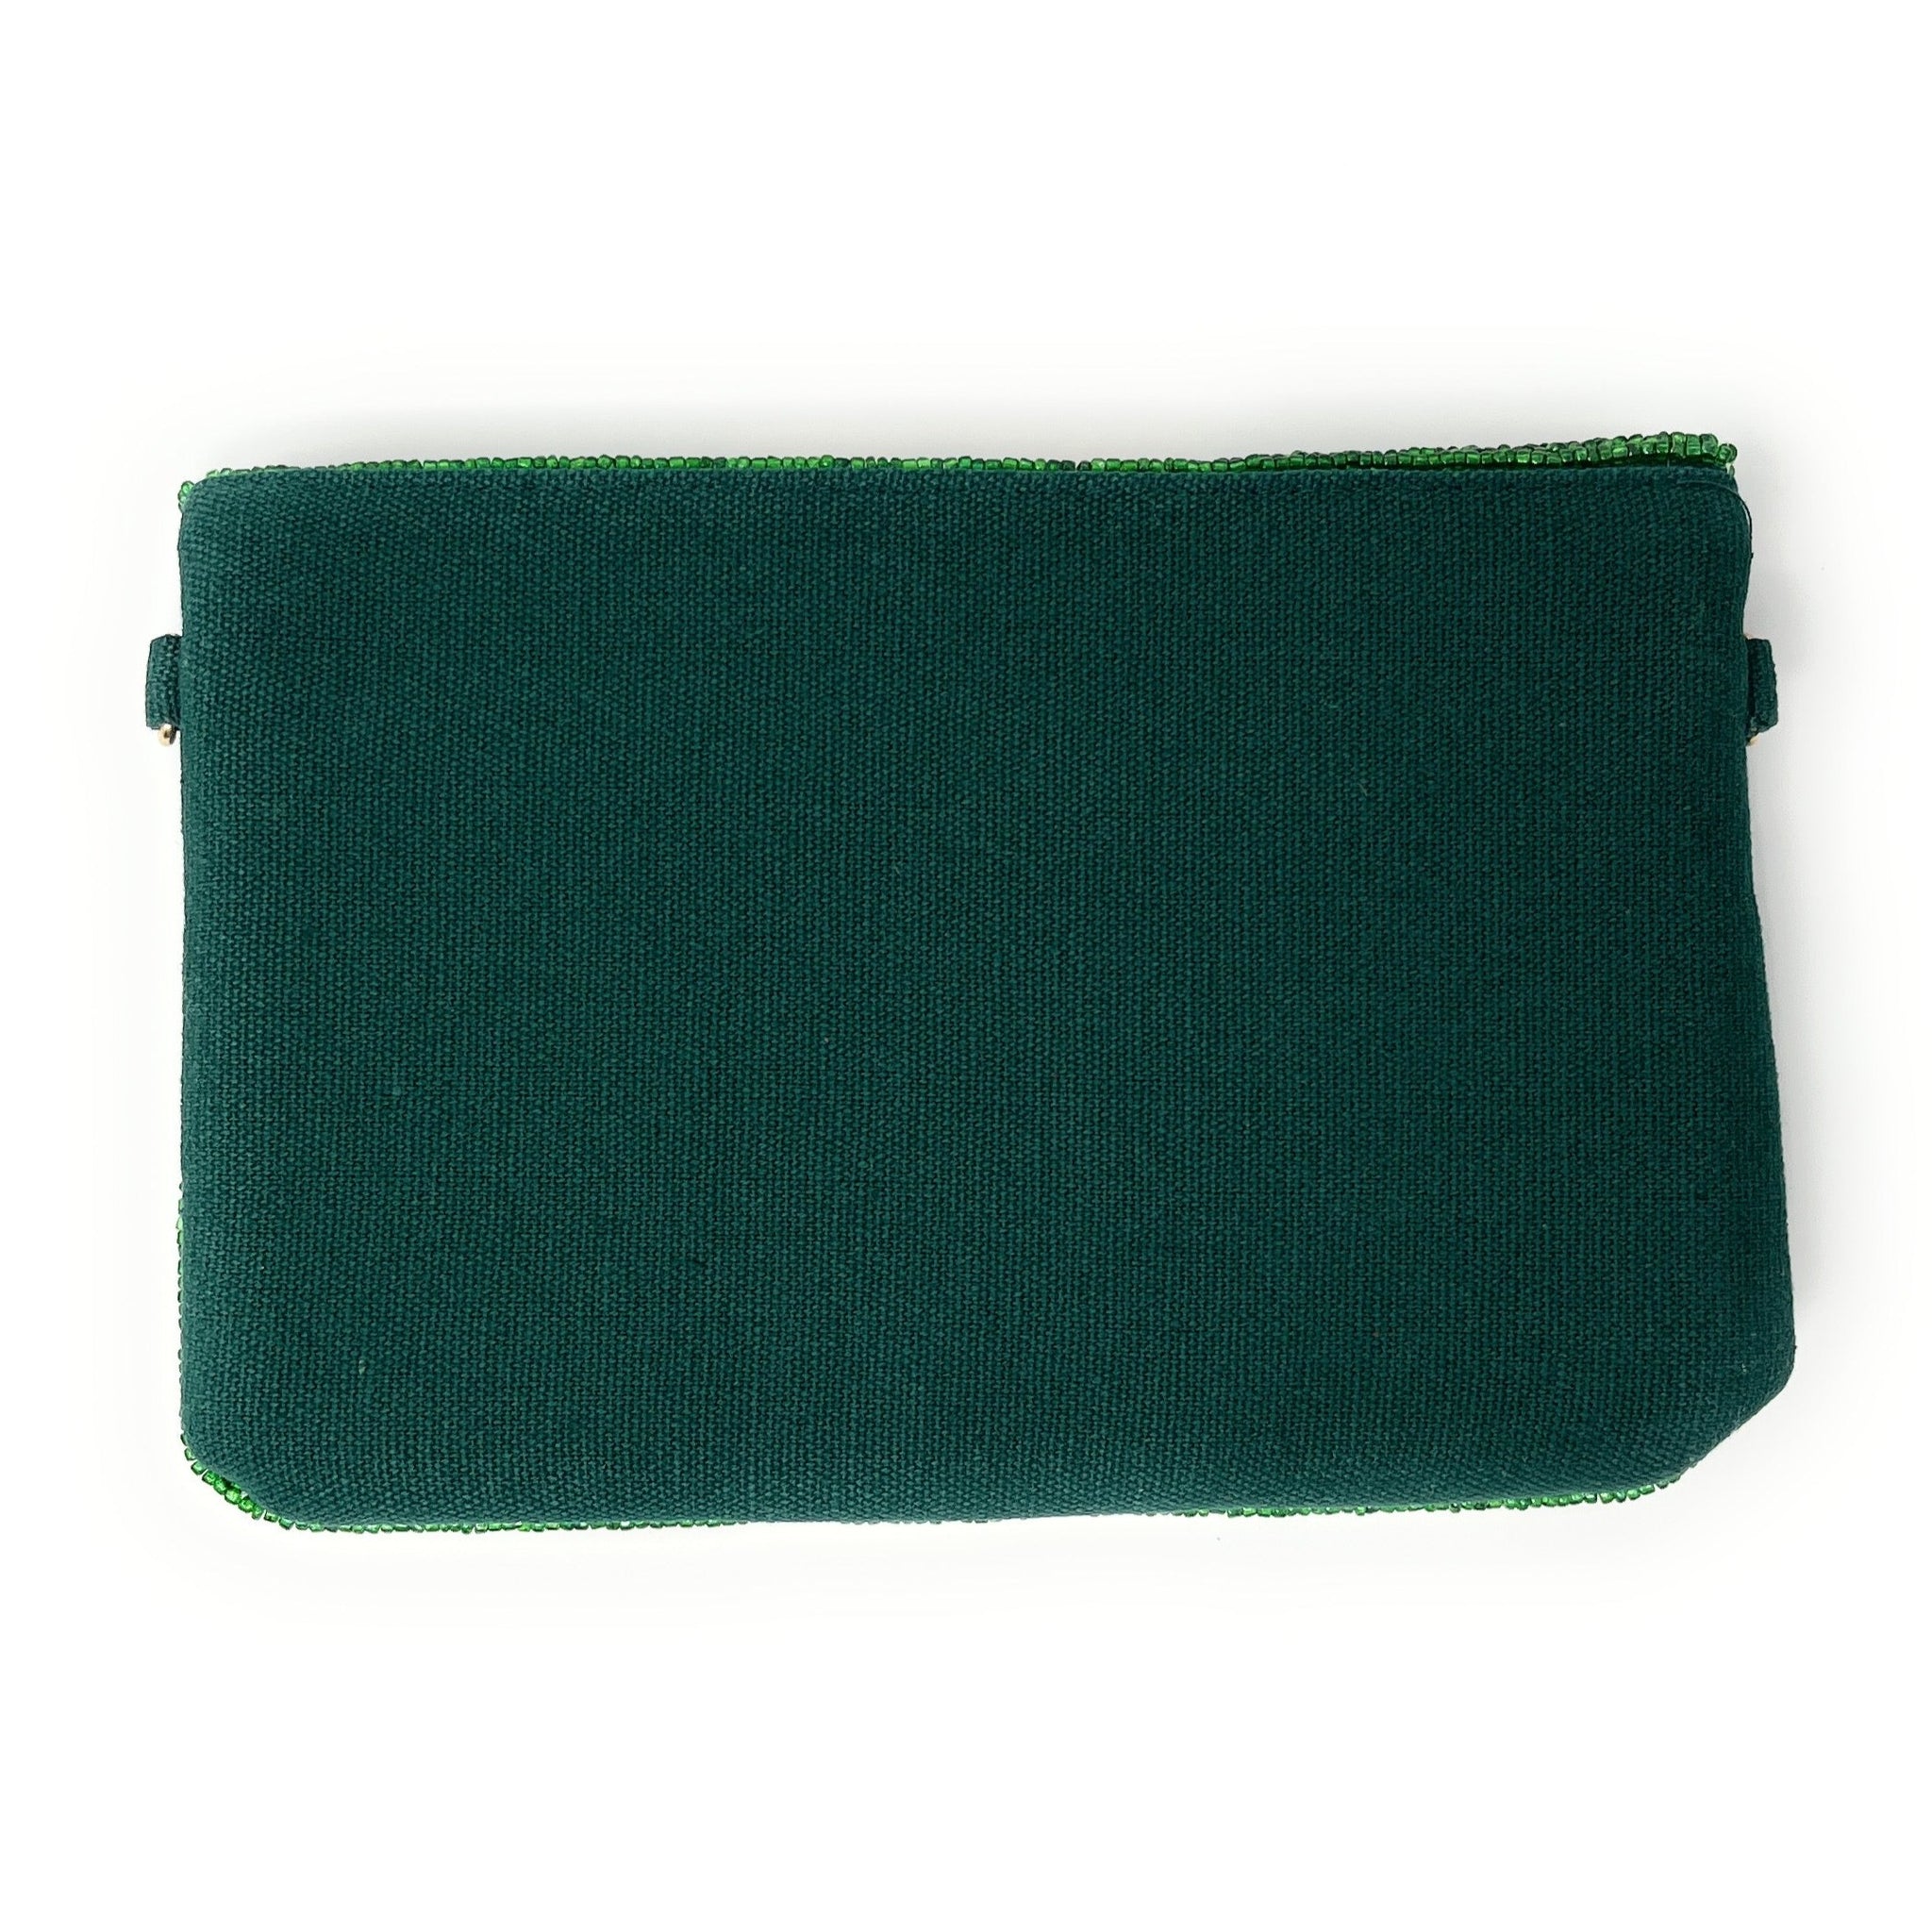 Kenneth Cole clutch purse with faux dark green alligator exterior | eBay